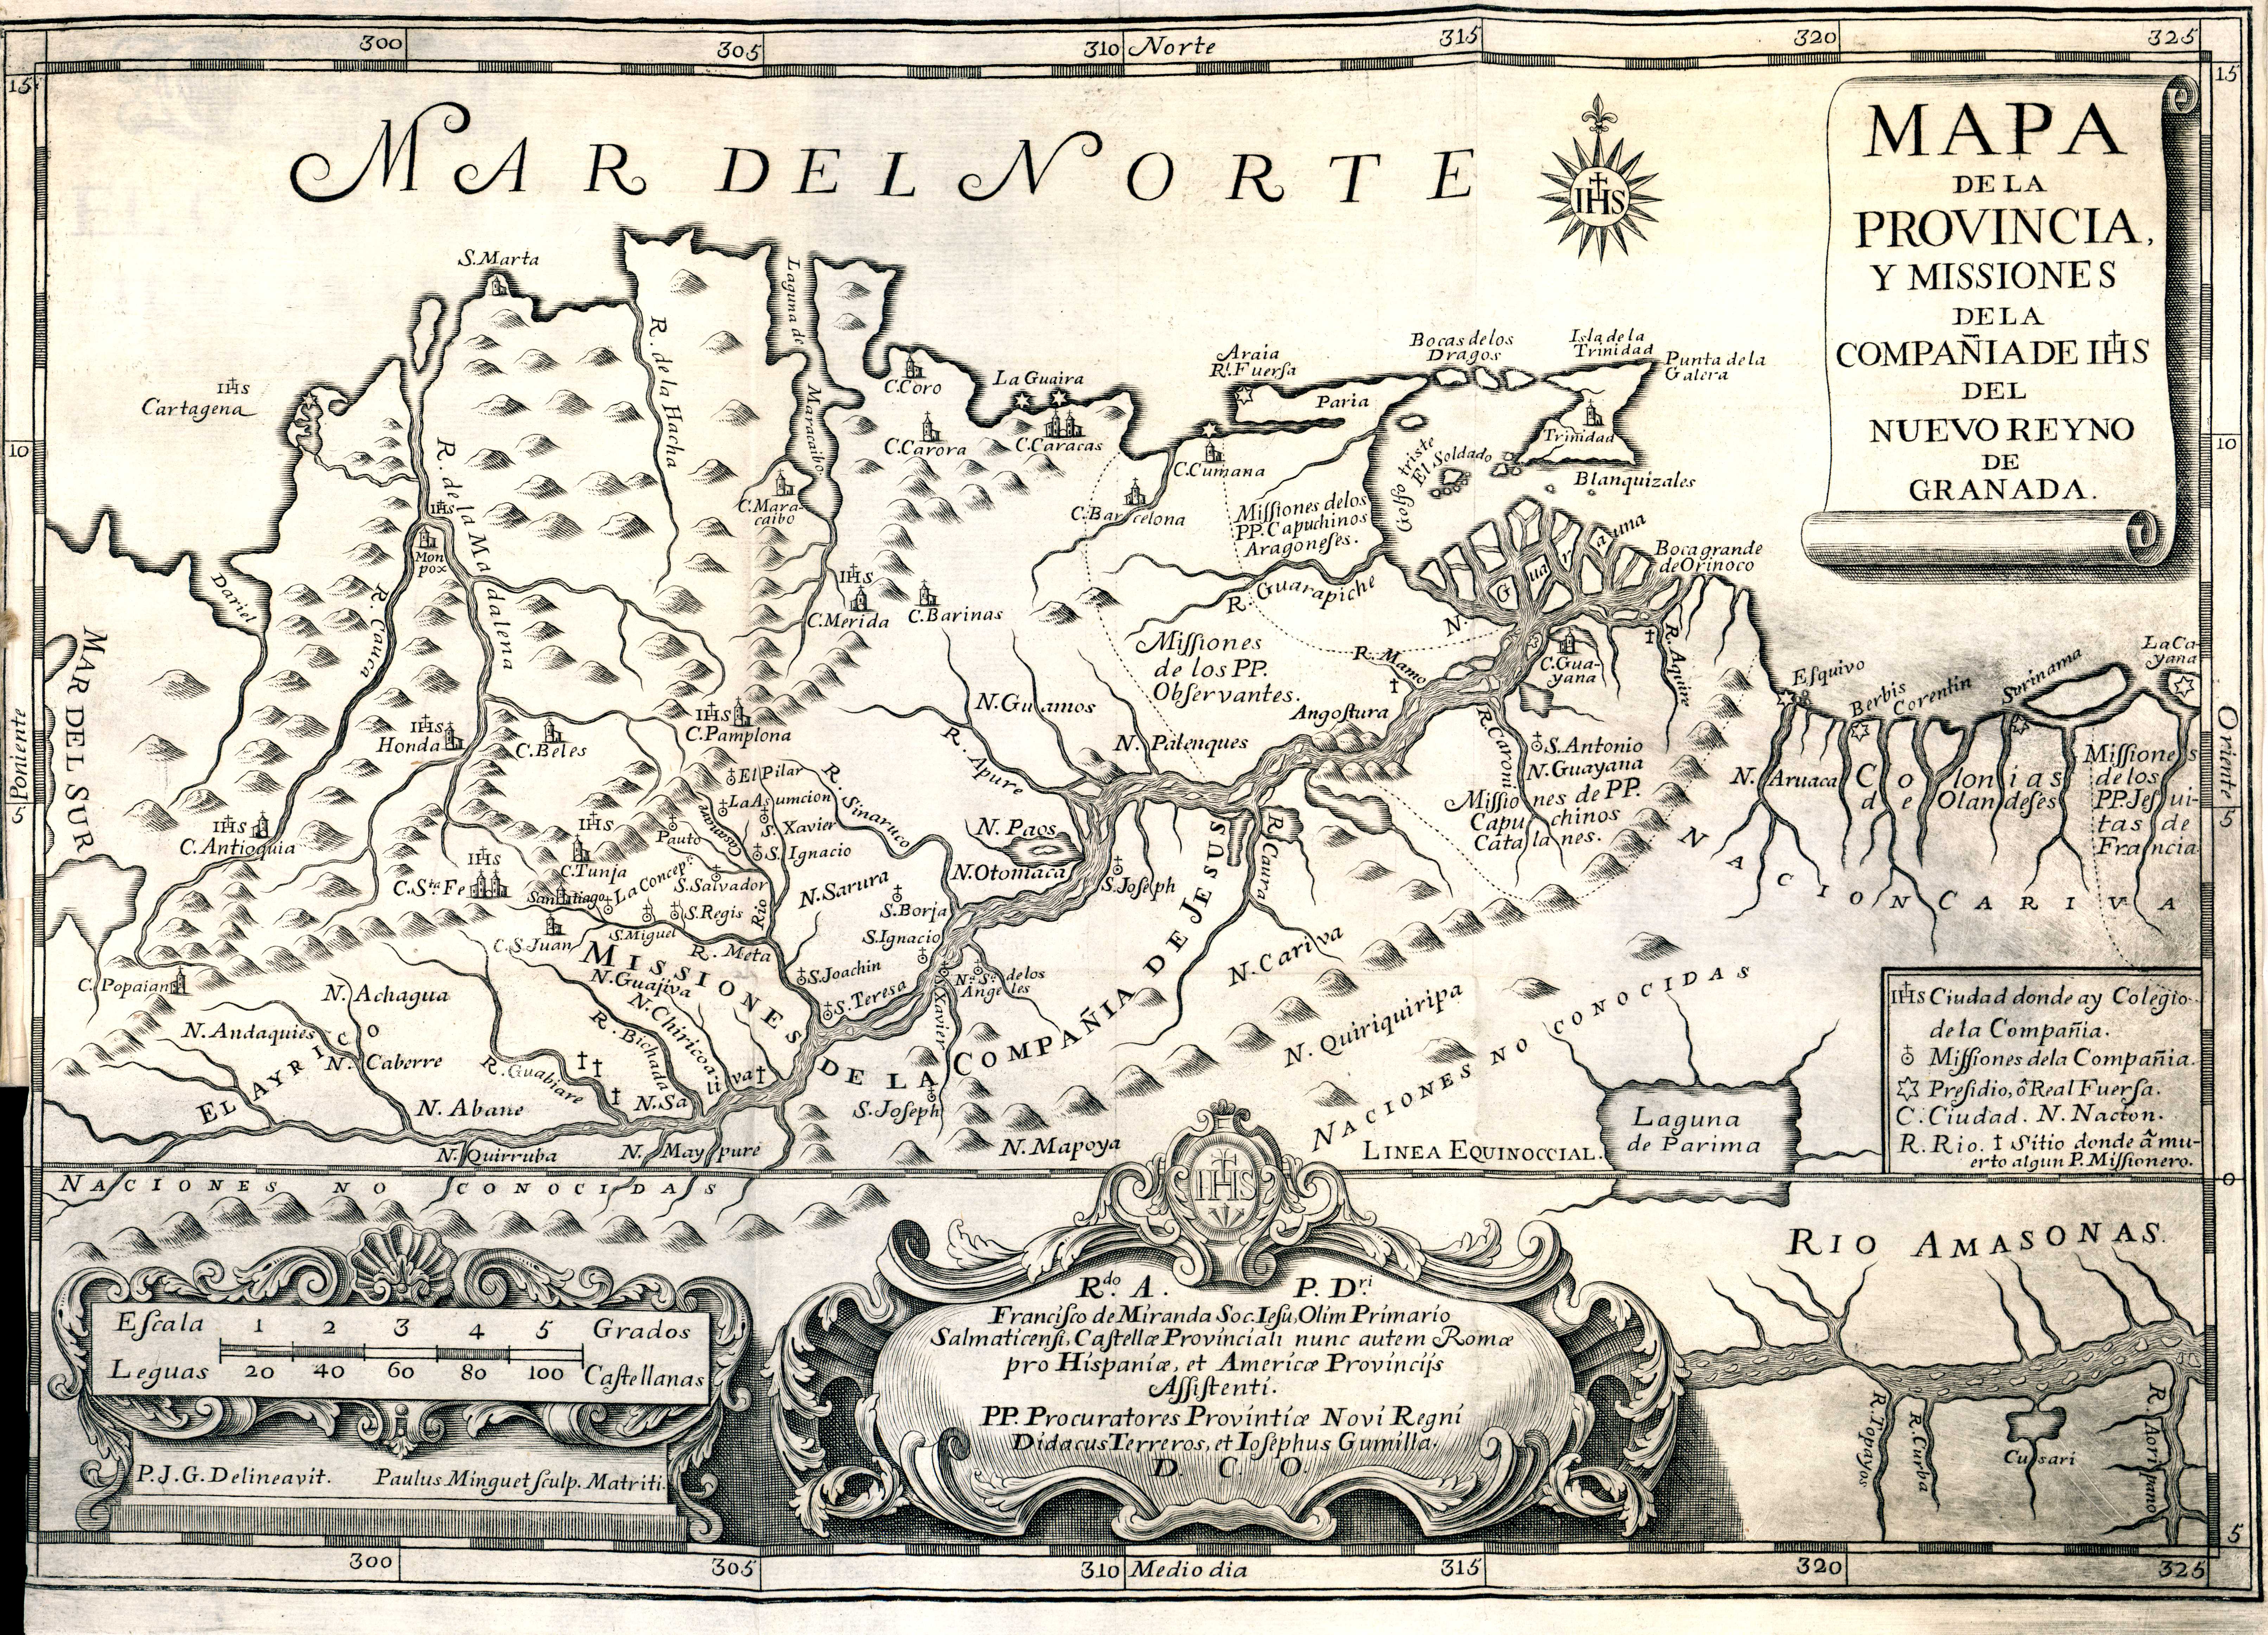 GUMILLA, José (SJ), El Orinoco ilustrado (Madrid, 1741). DER 12100 – Mapa desplegable en preliminares